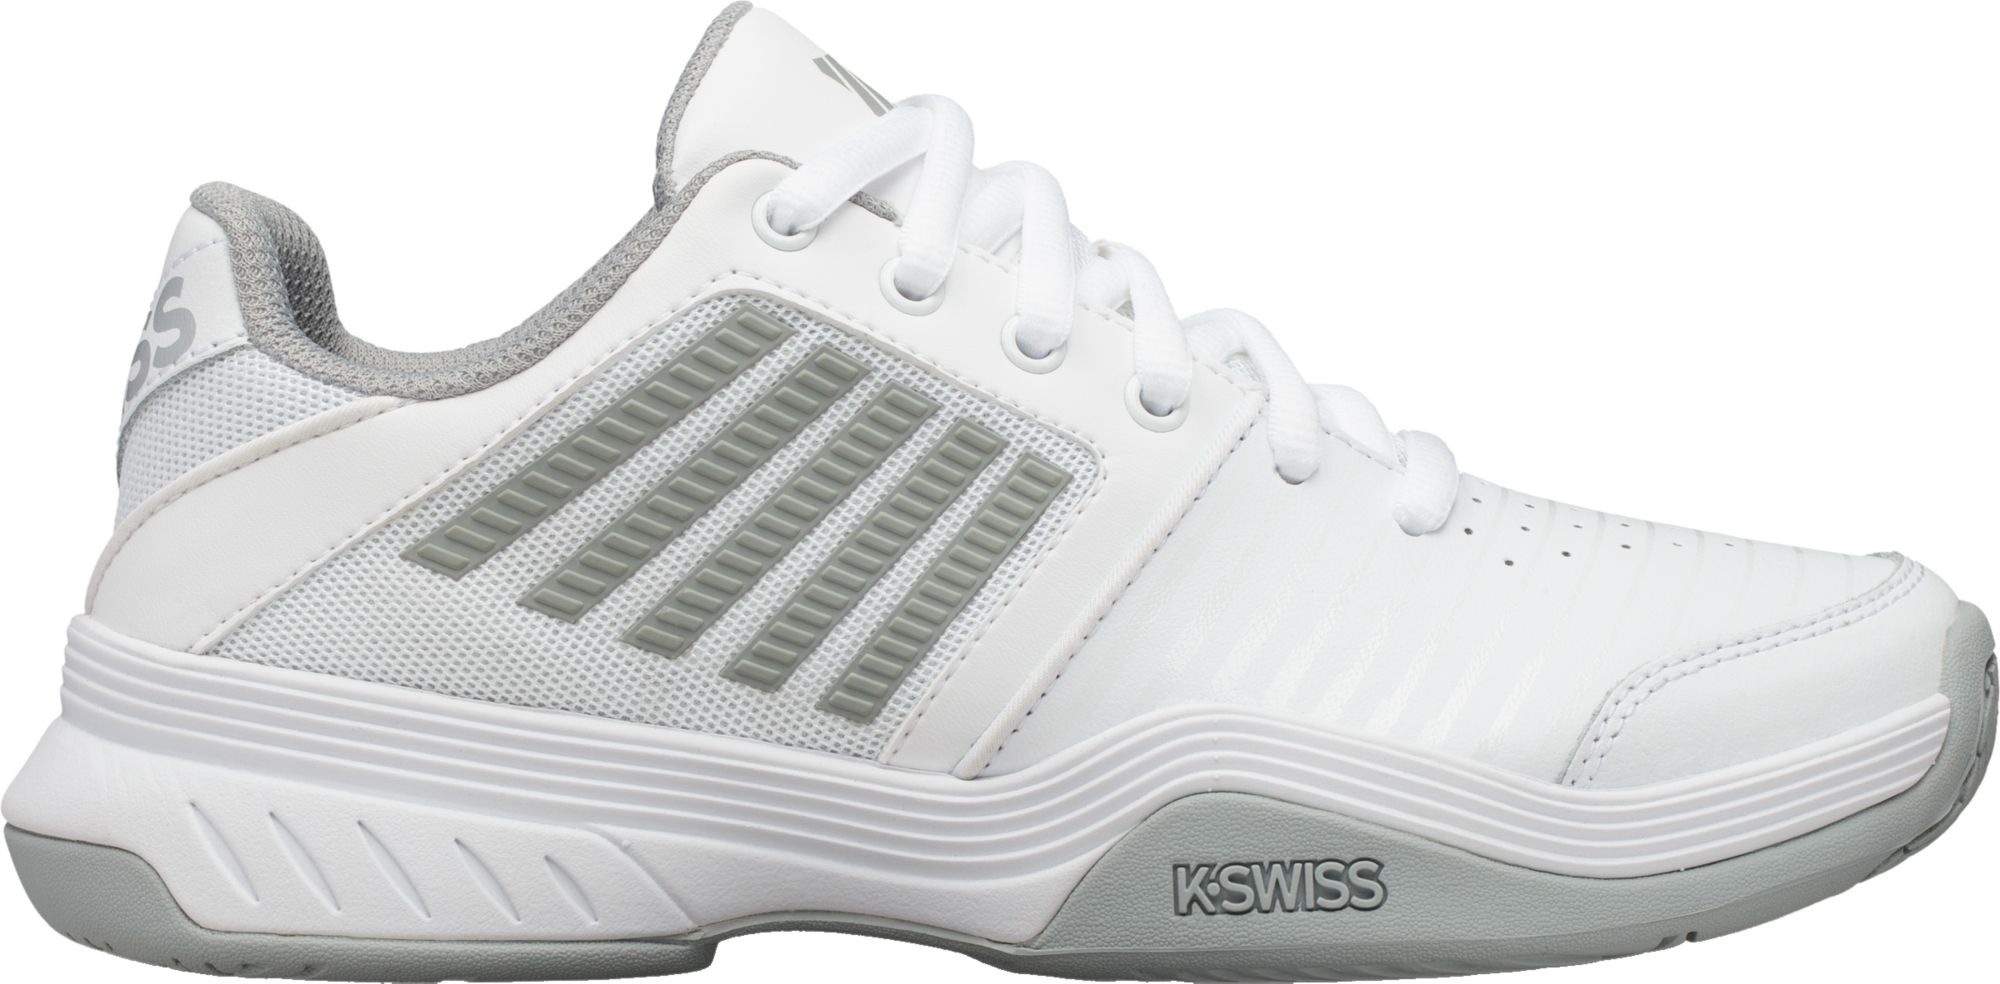 k swiss womens tennis shoes